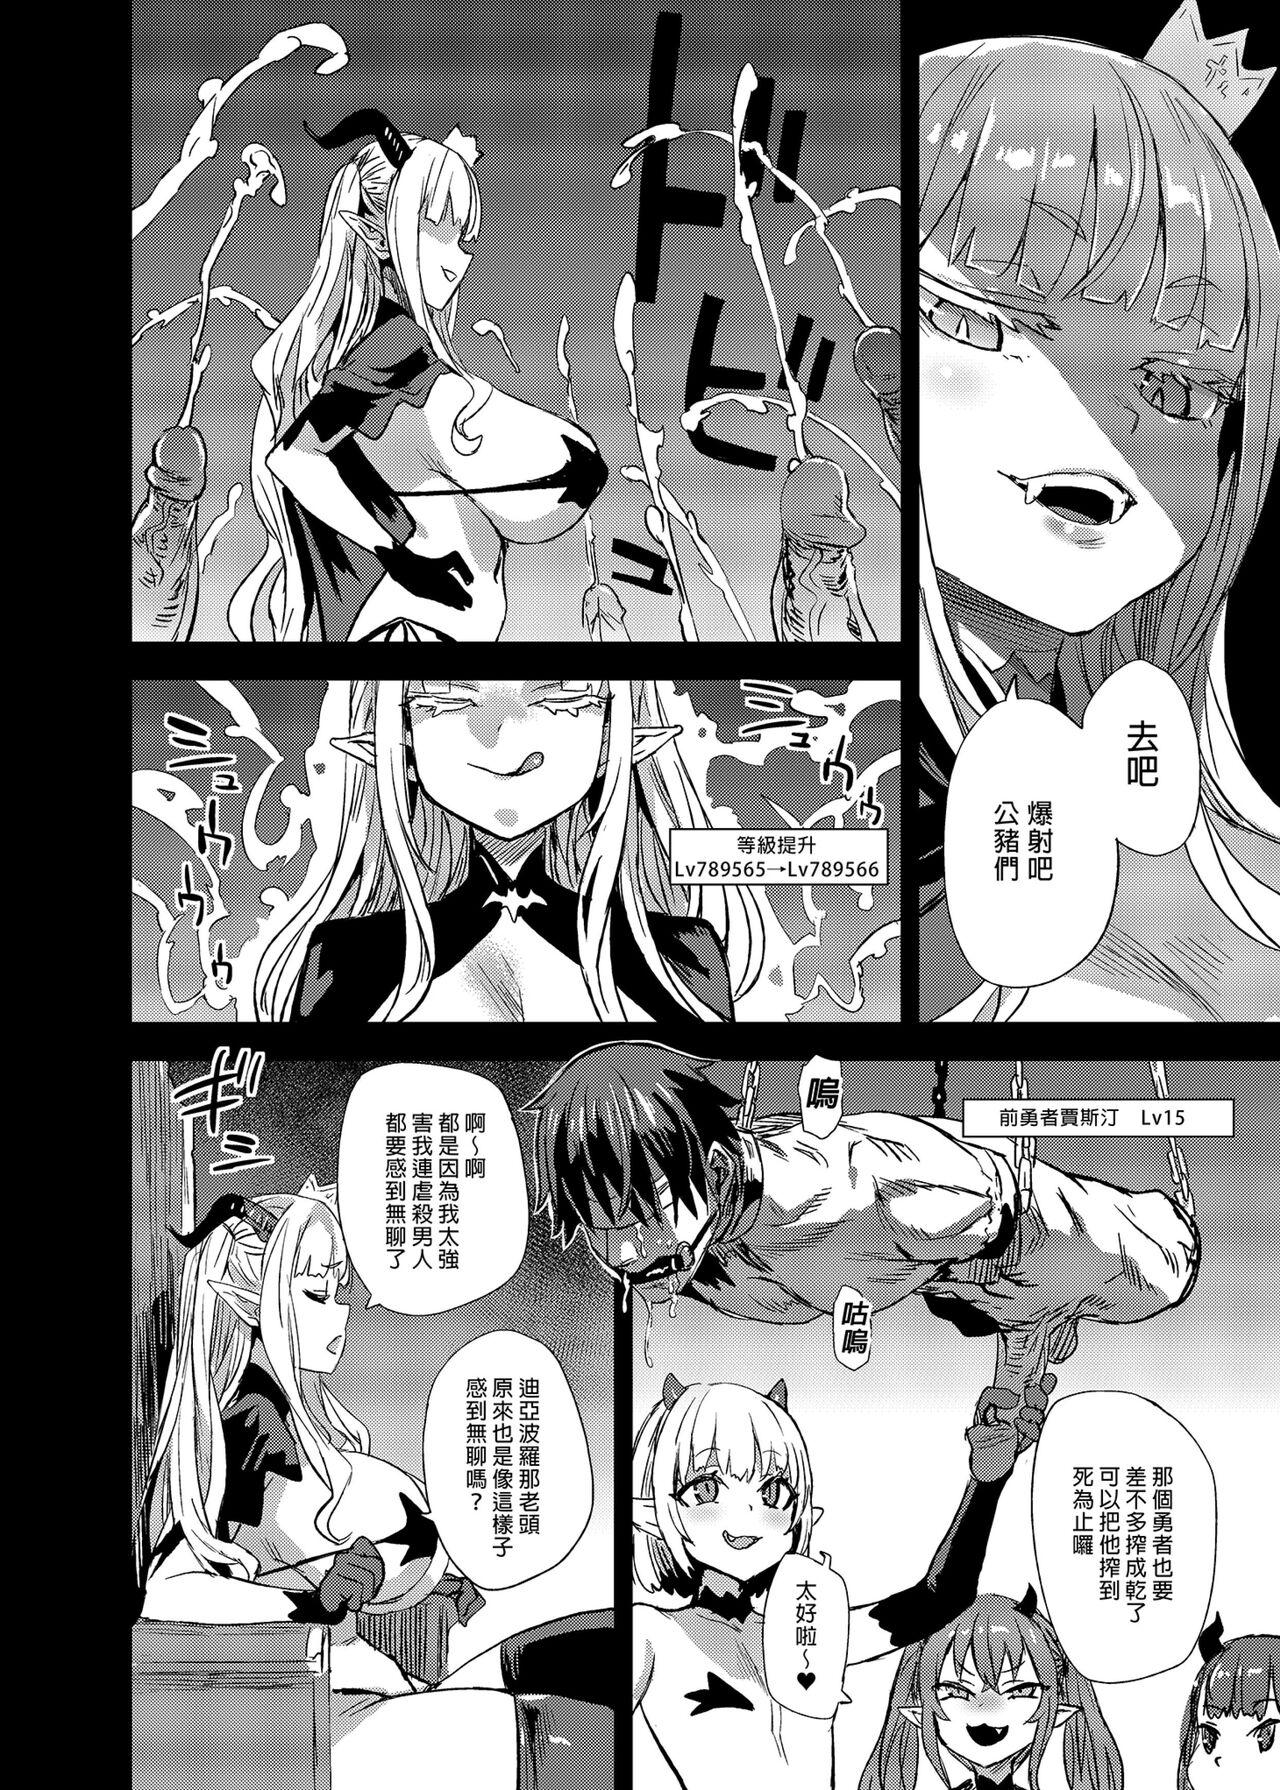 Flagra Succubus Joou vs Zako Goblin 魅魔女王vs雜魚哥布林 - Original Ebony - Page 6